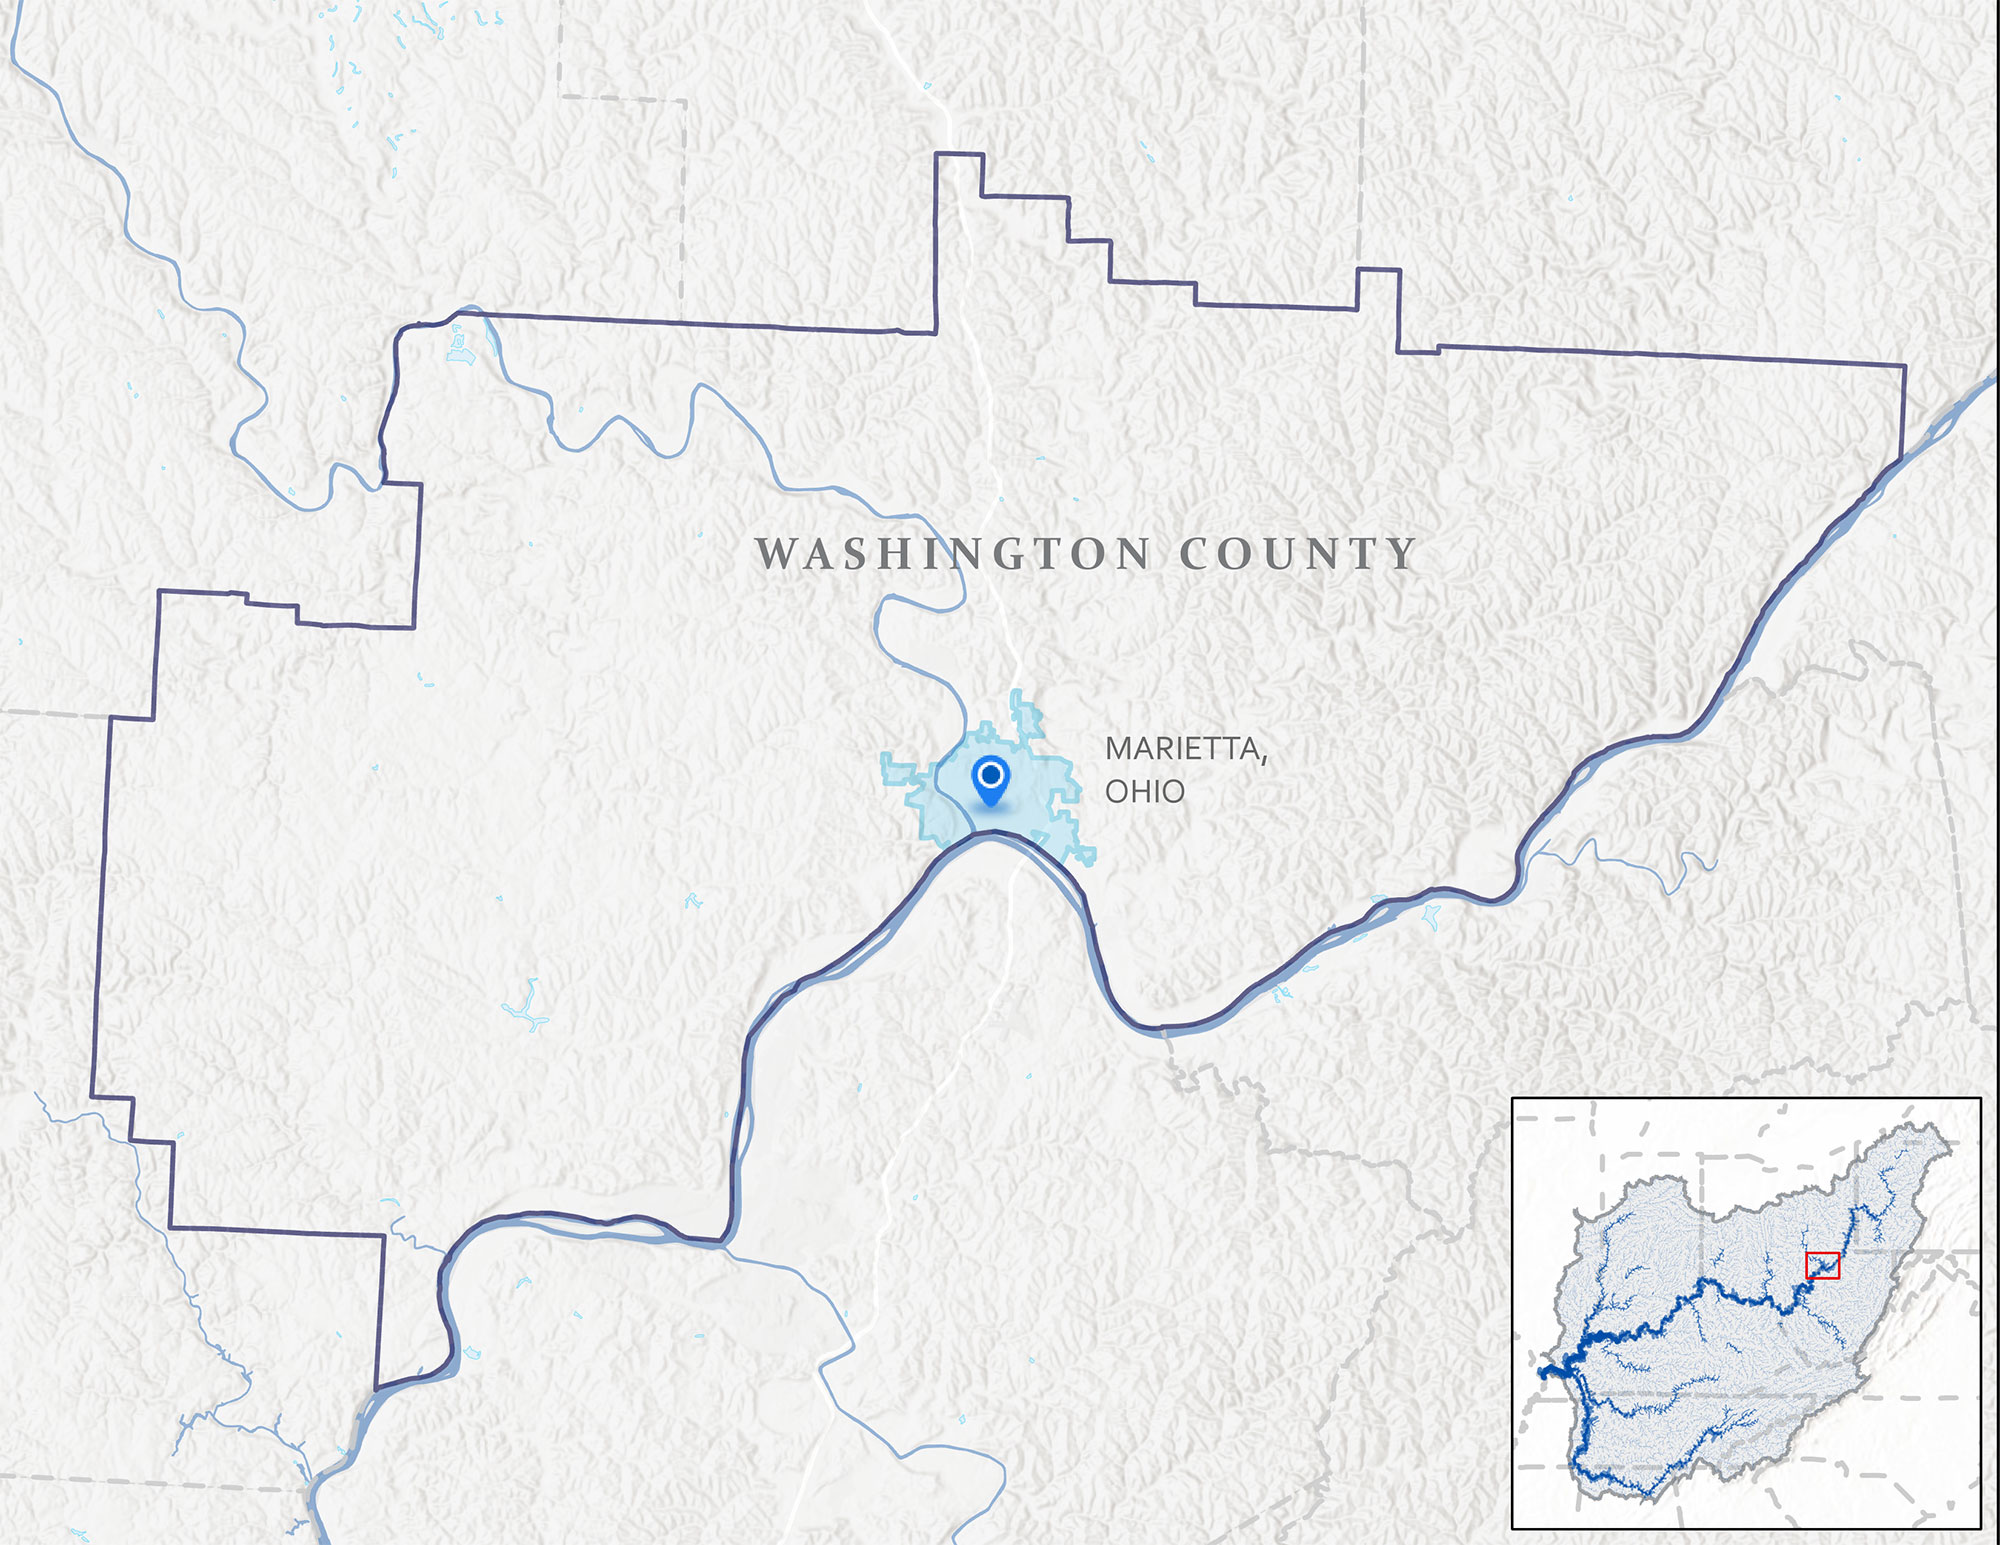 Map showing Marietta, Ohio and the Ohio River.